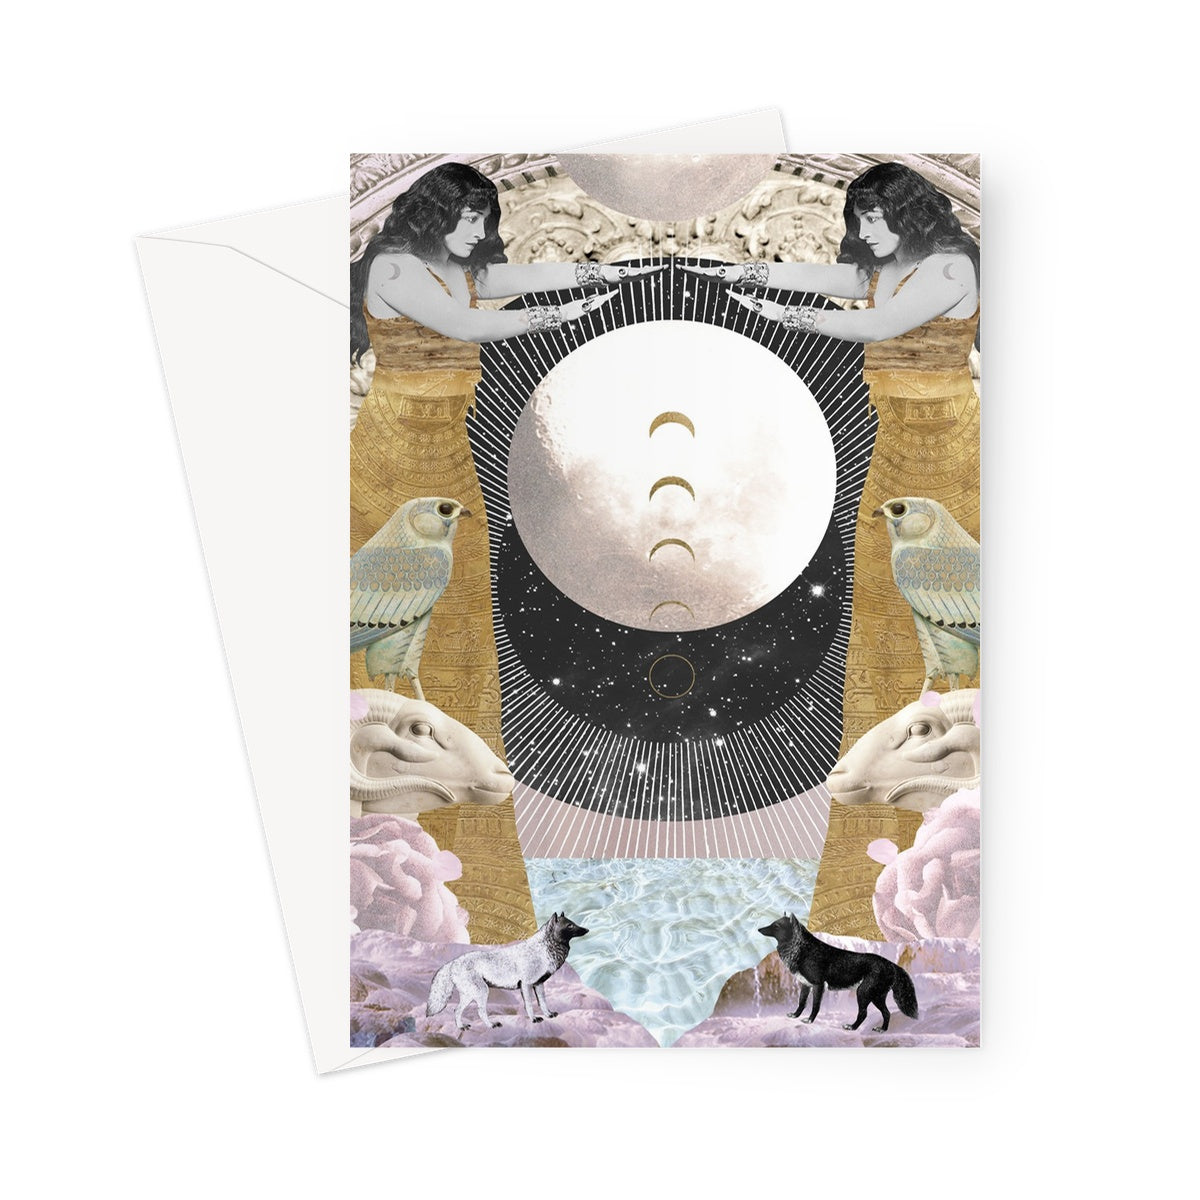 The Moon Greeting Card - Starseed Designs Inc.